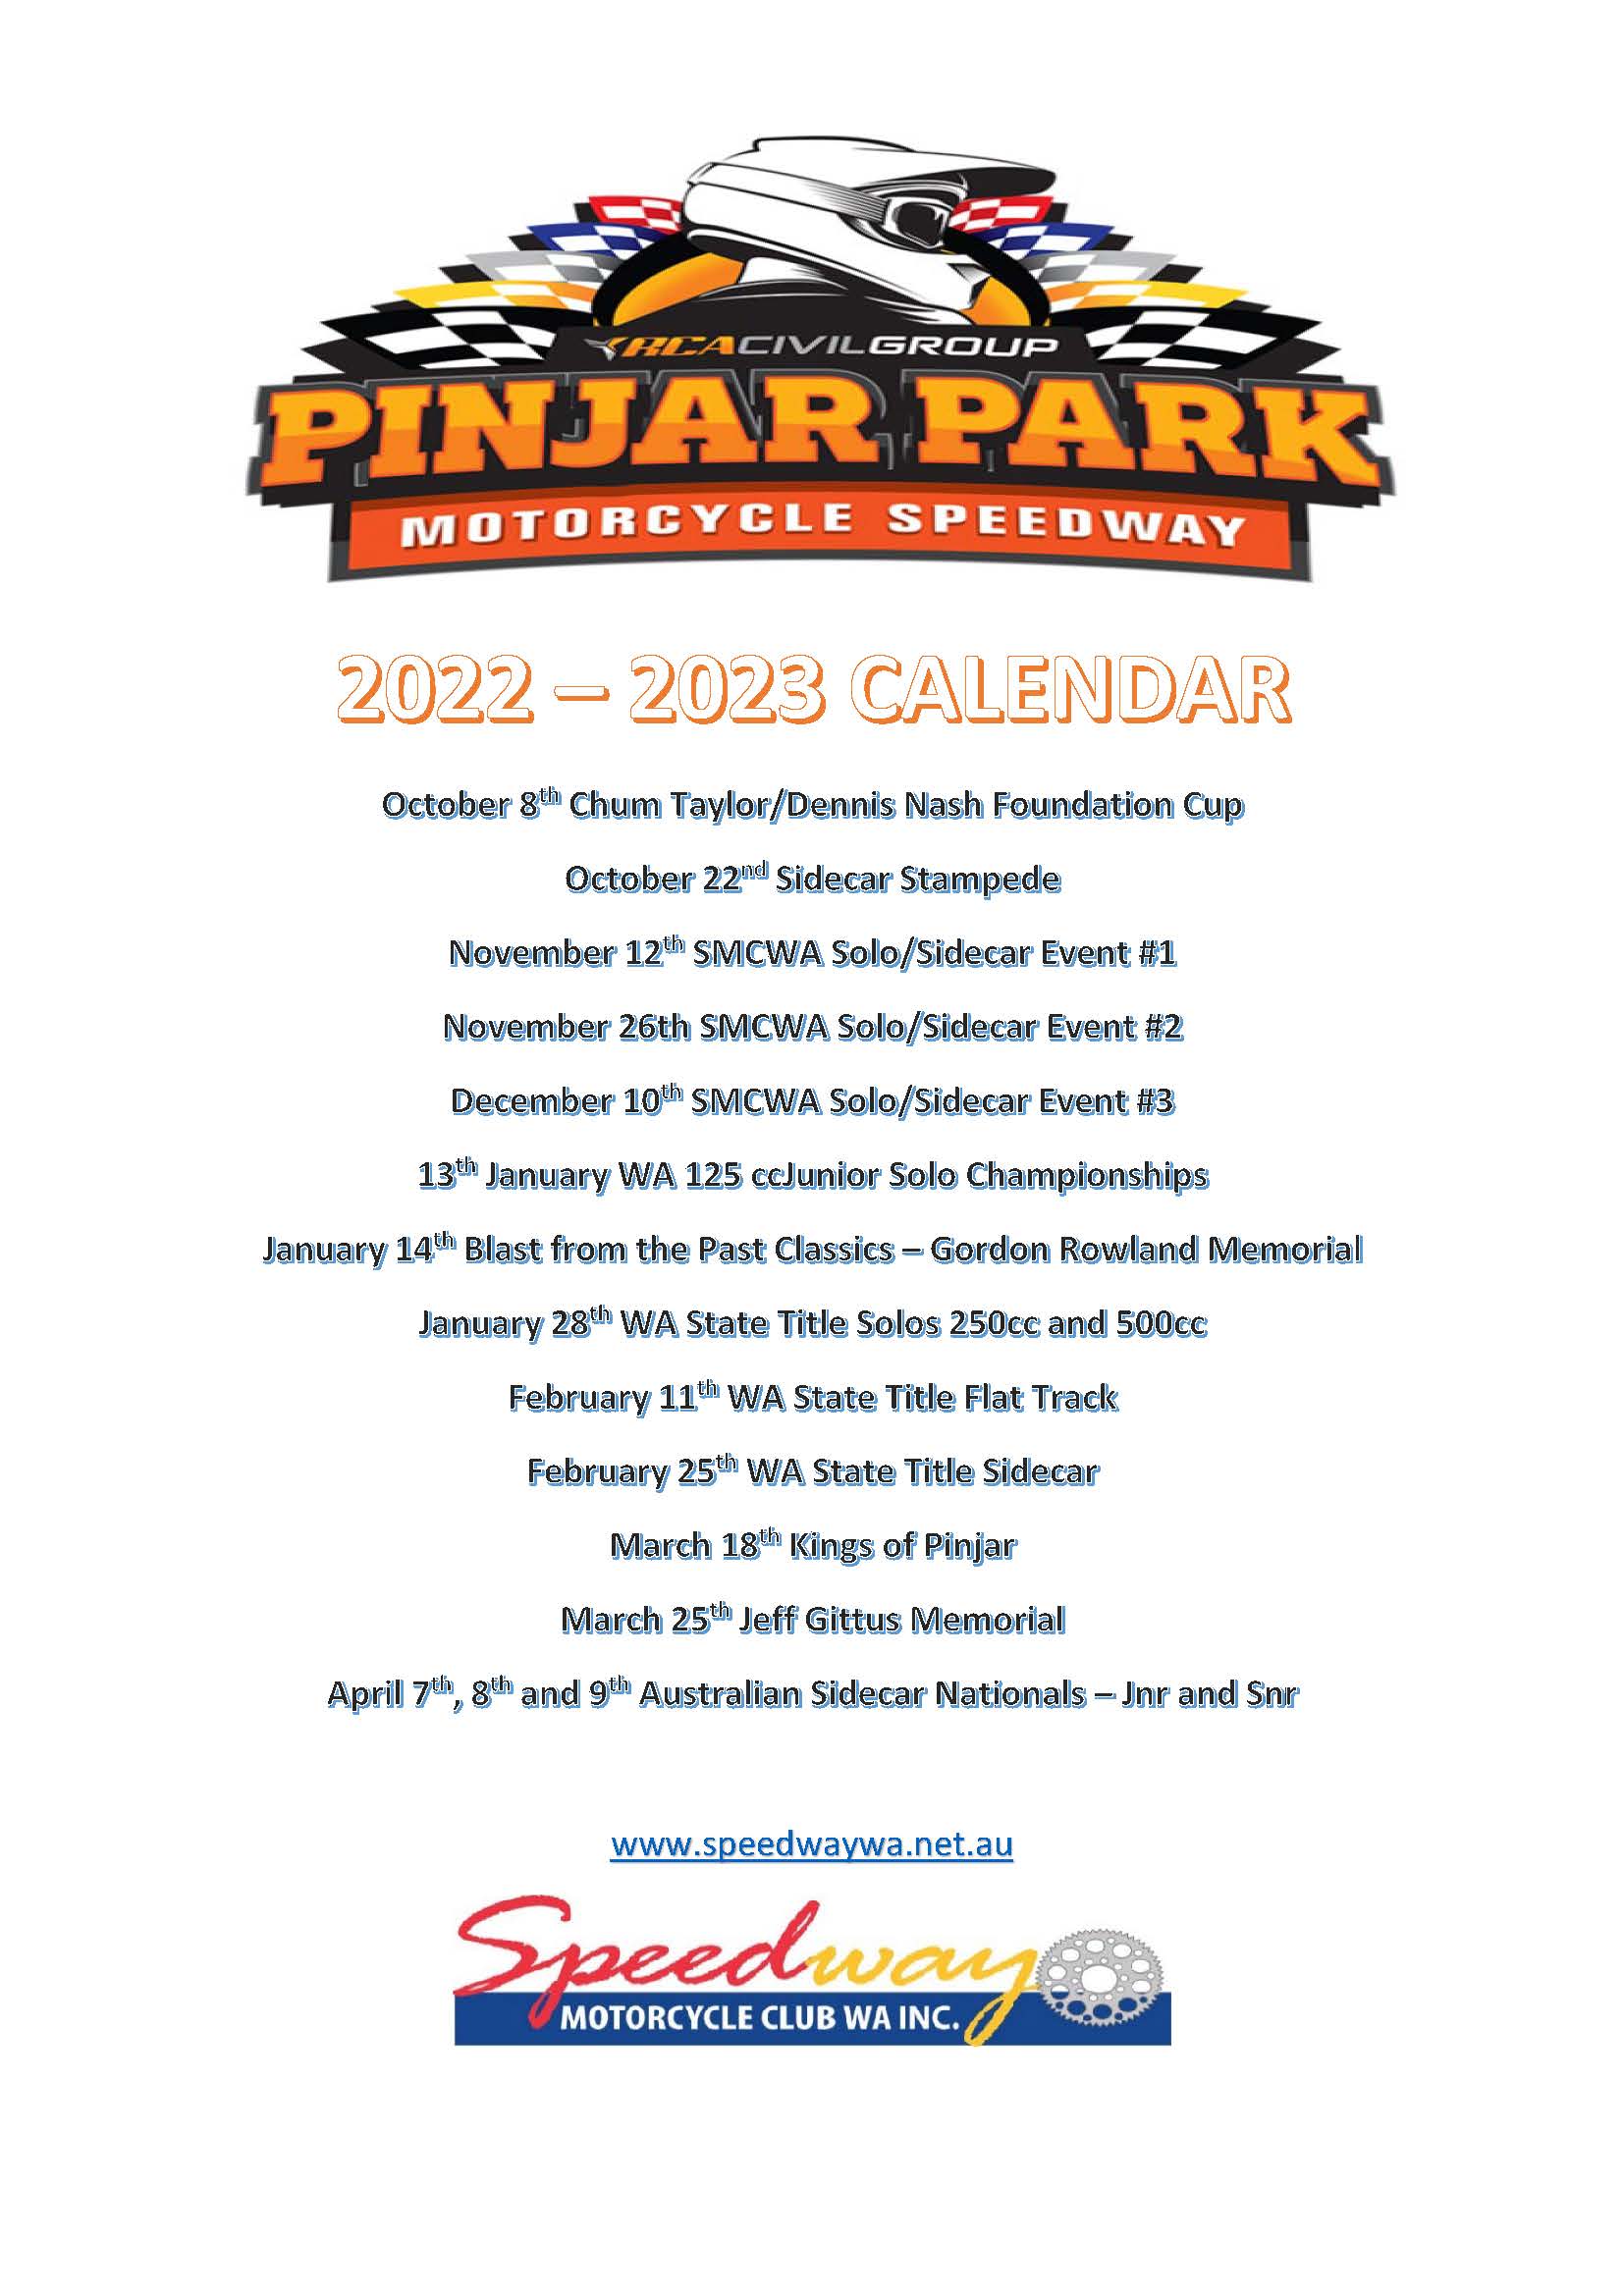 Calendar RCA Civil Pinjar Park Speedway